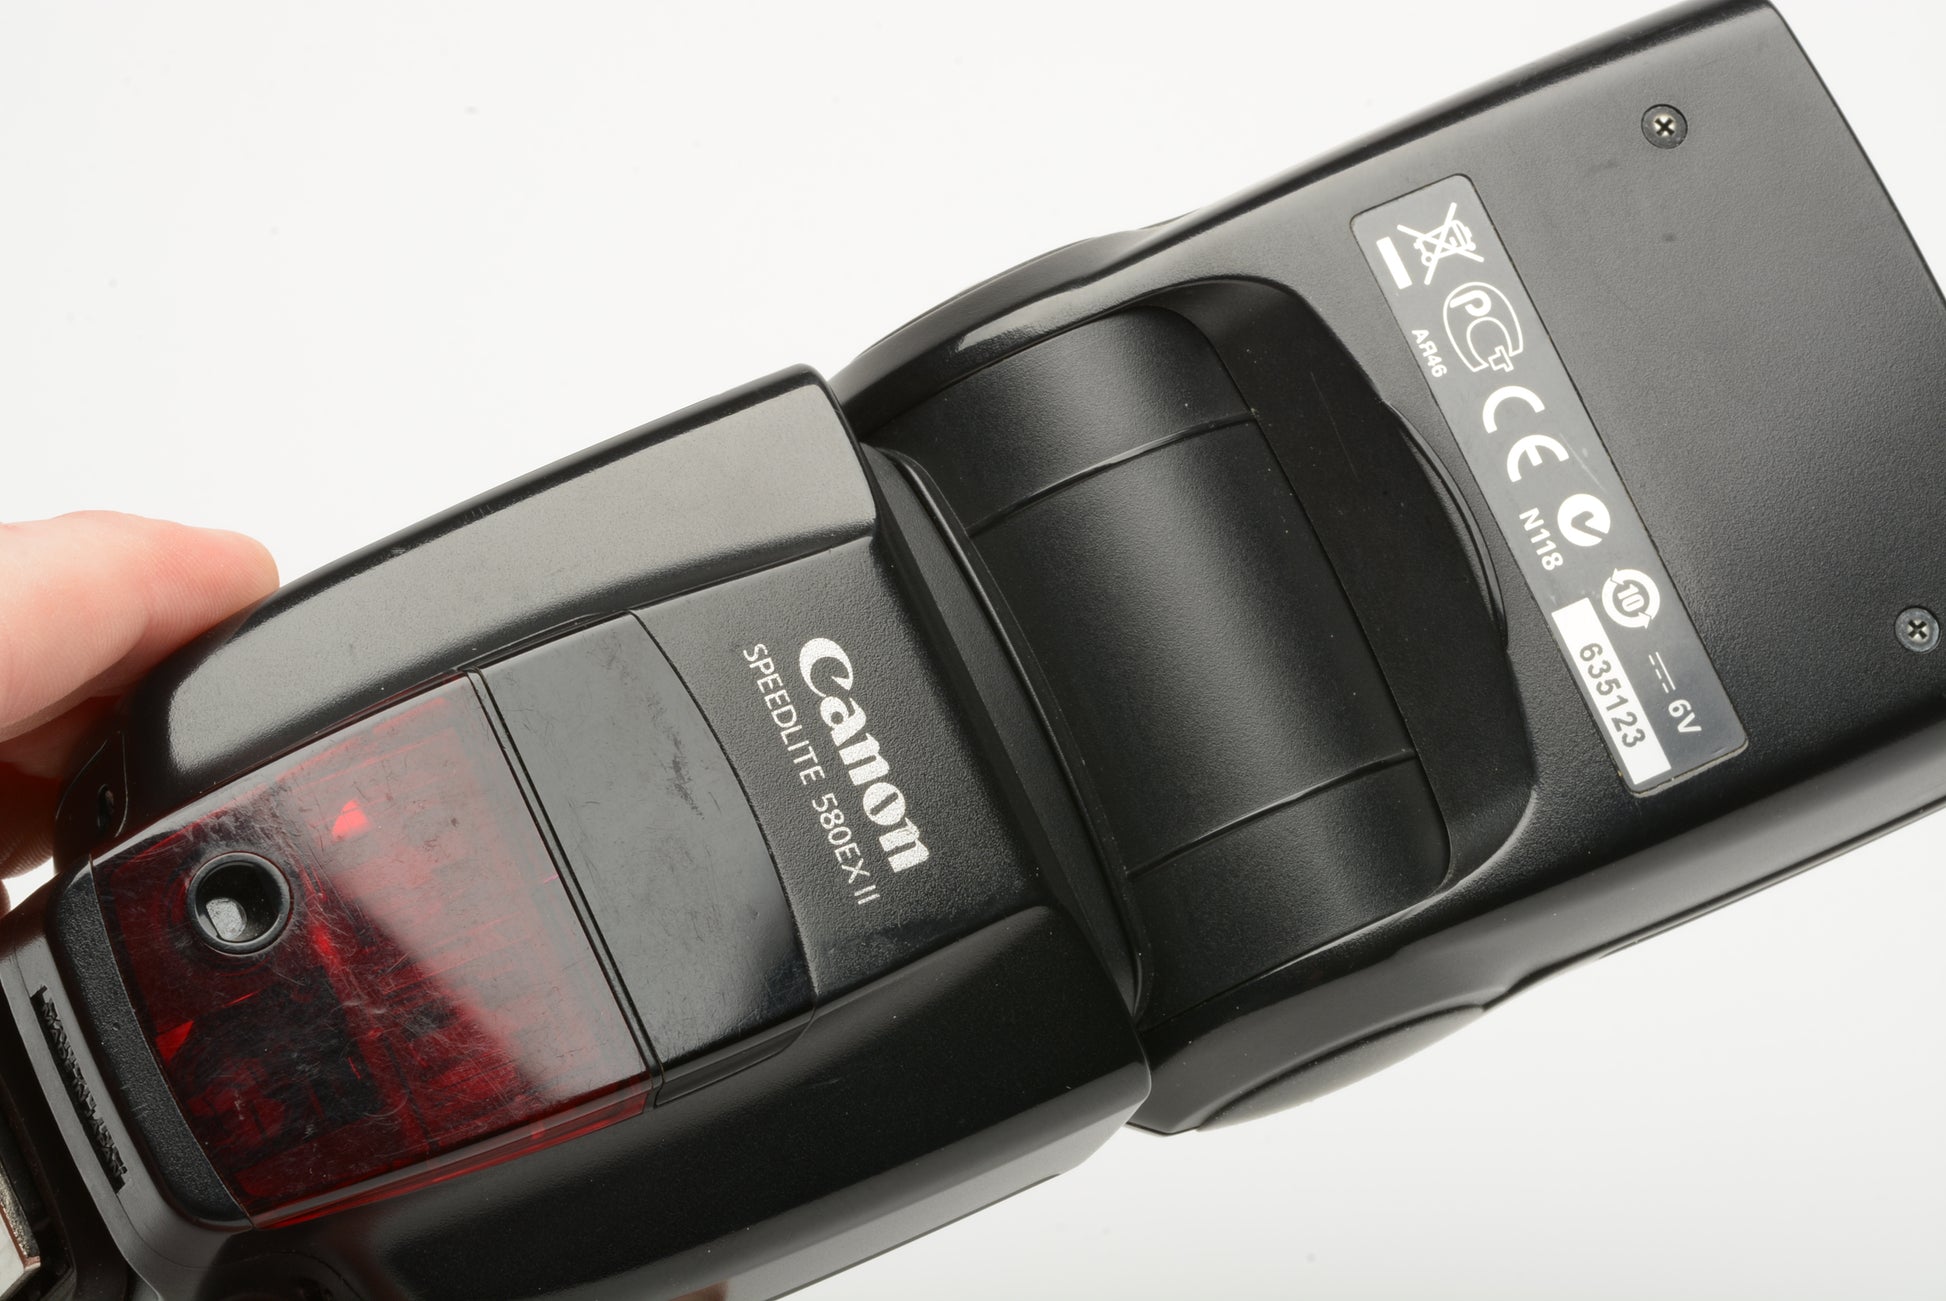 USED Canon 580EX II Speedlite Flash